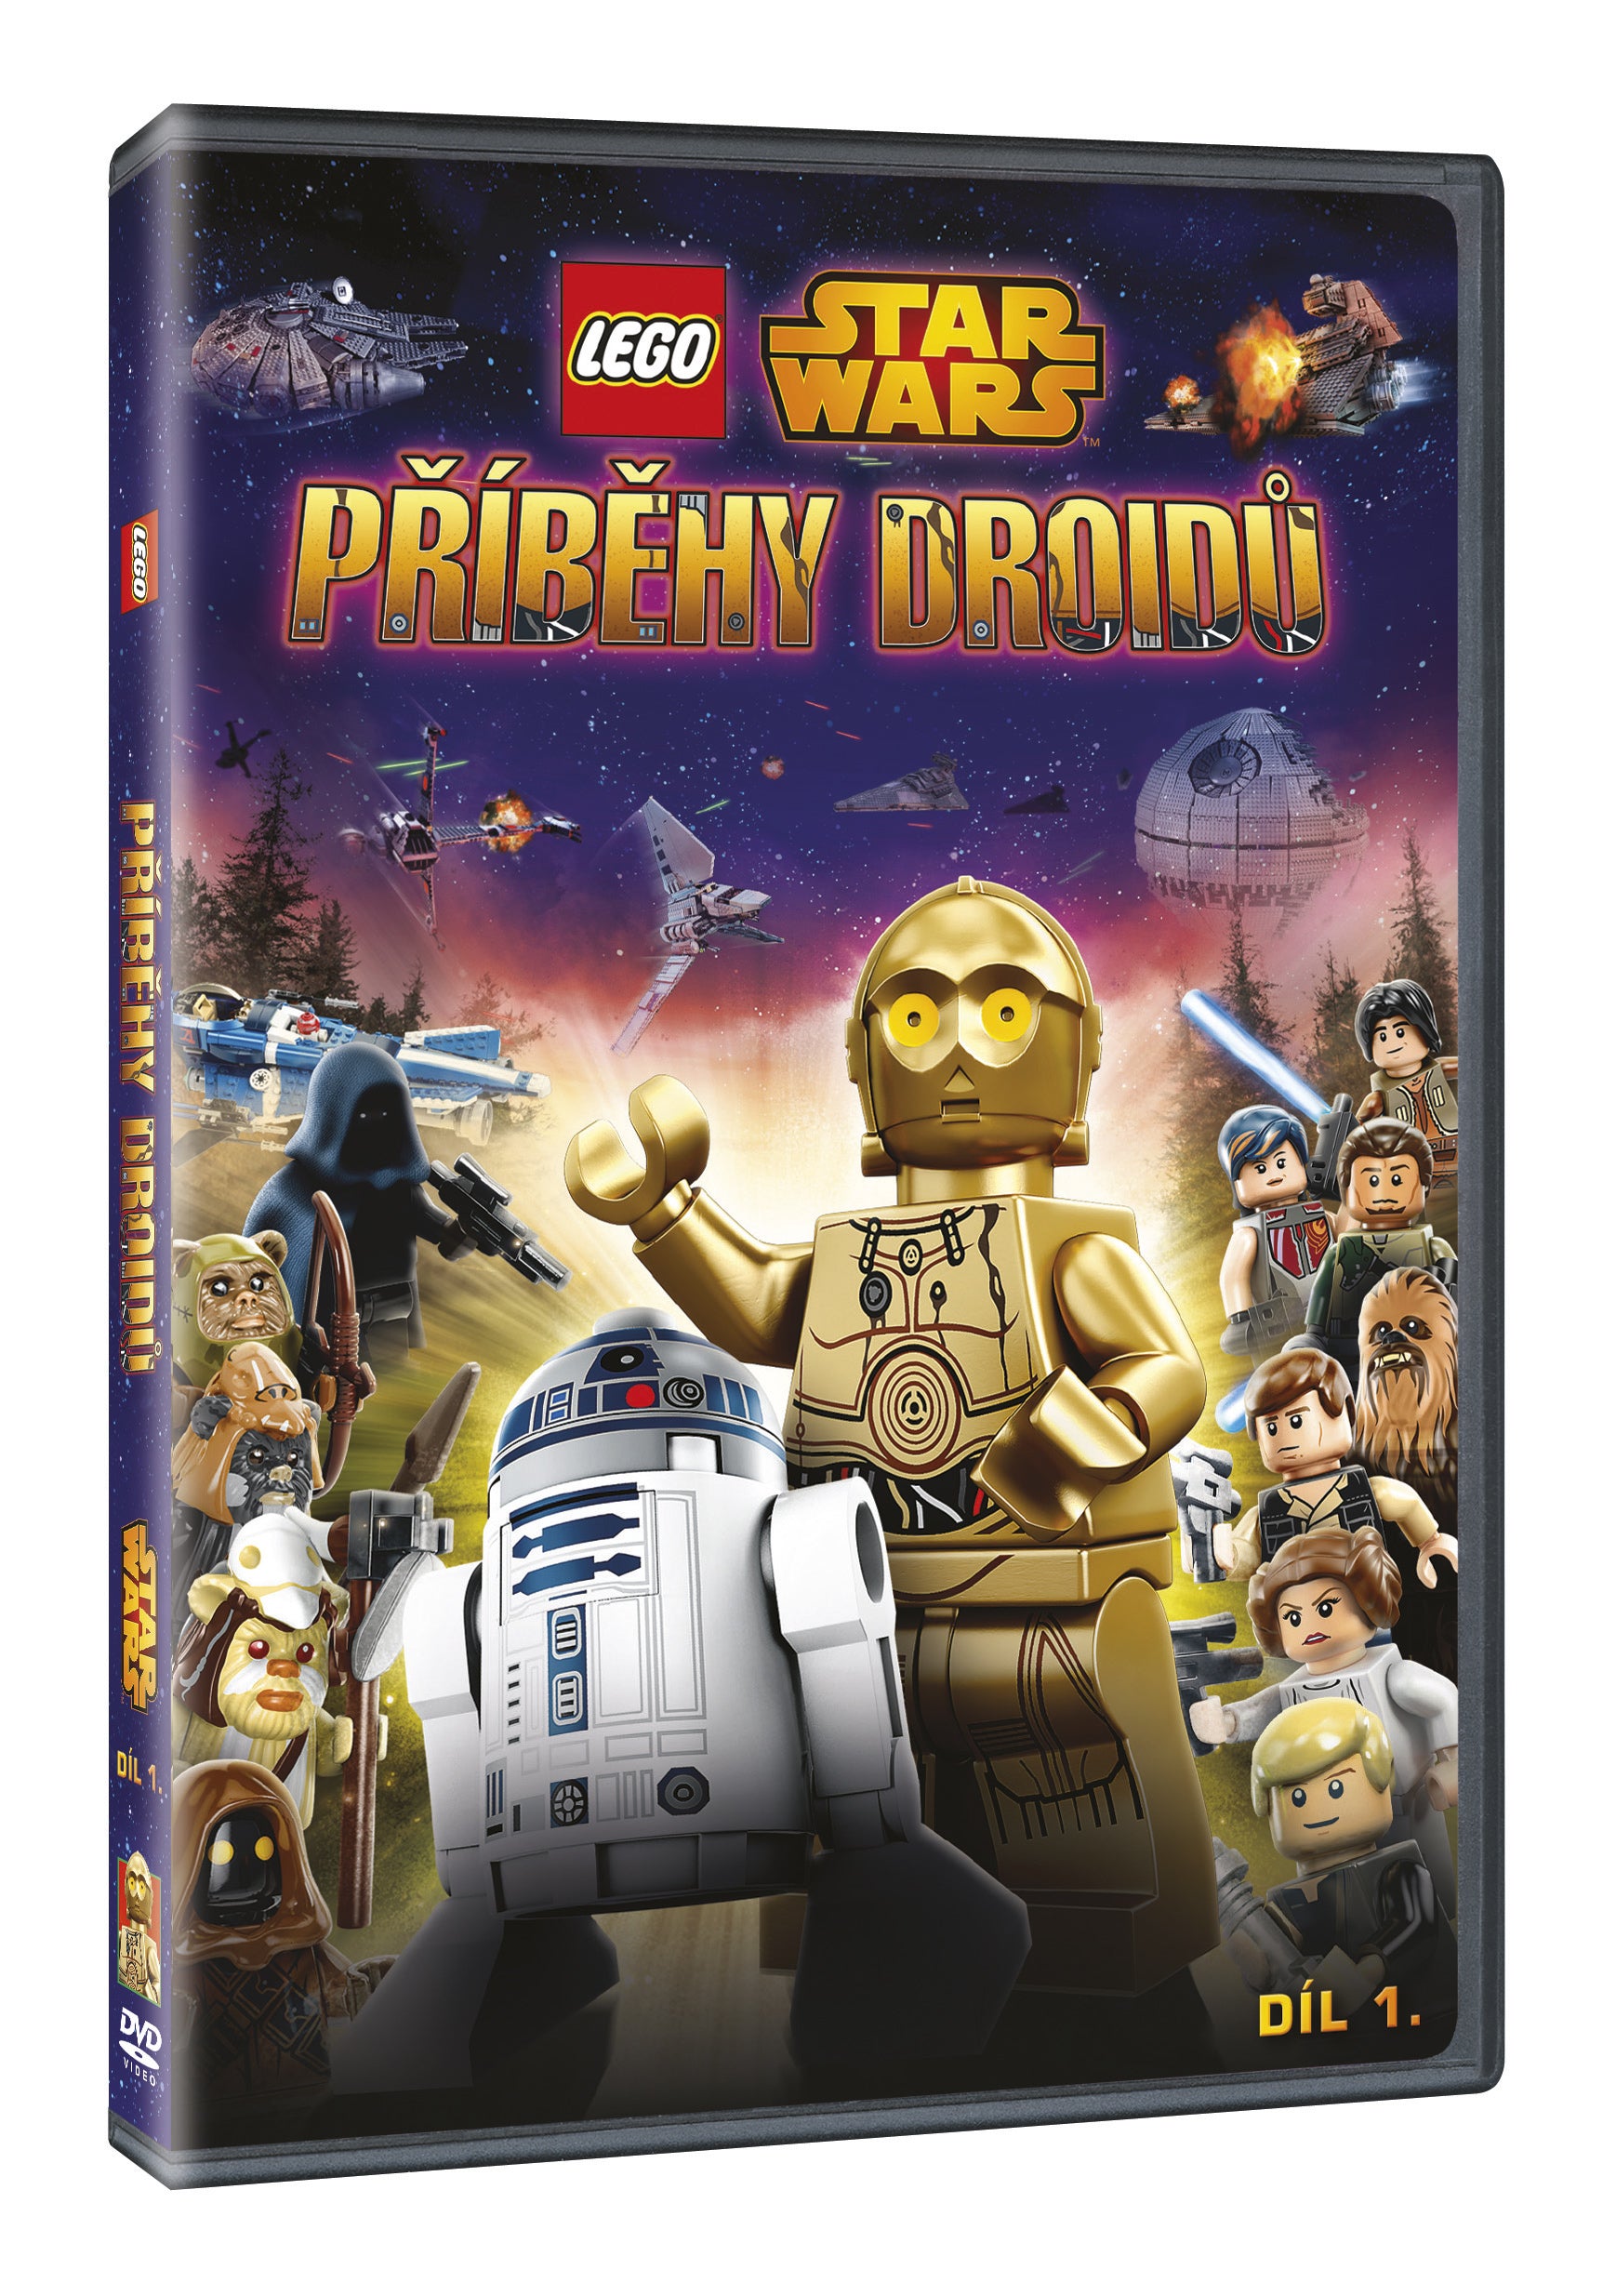 Lego Star Wars: Pribehy droidu 1 DVD / LEGO Star Wars: Droid Tales: Volume 1